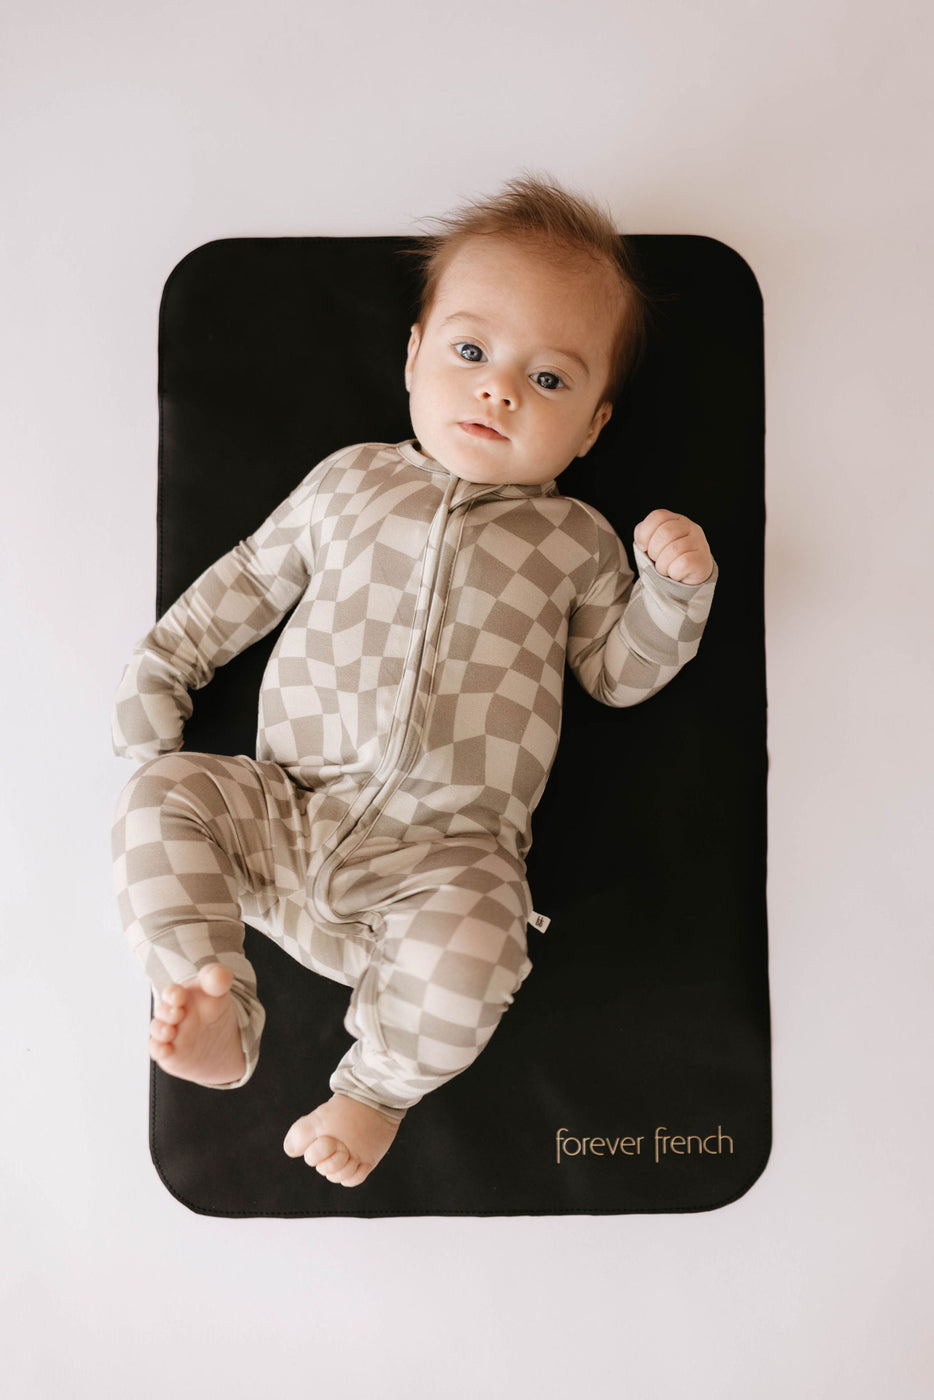 a baby lying on a black mat